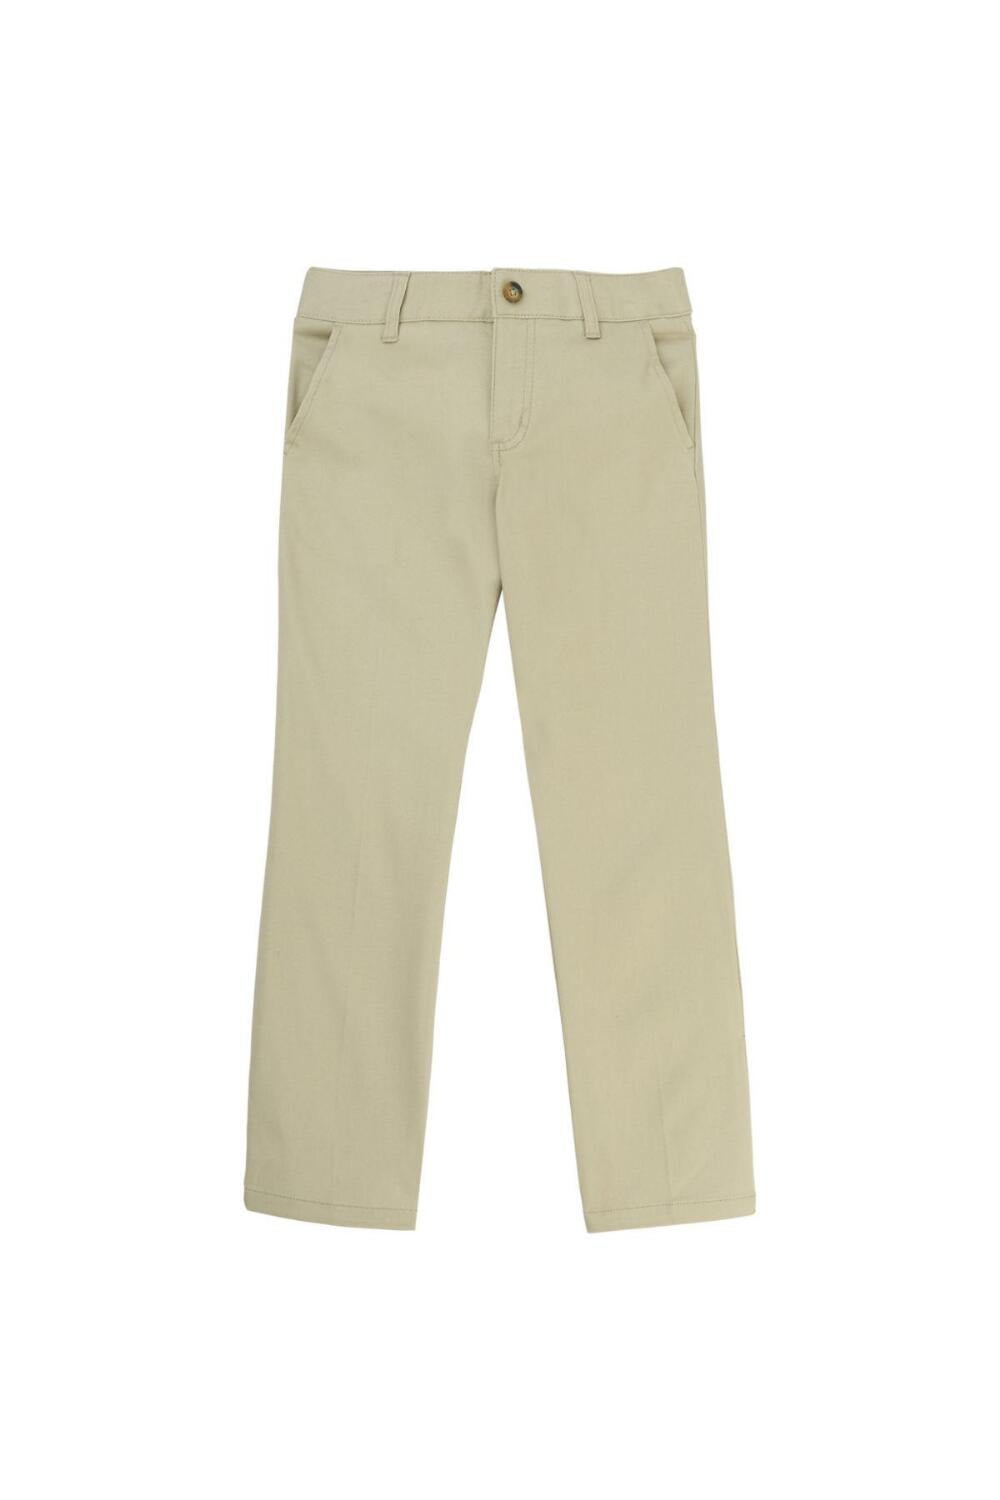 Wholesale Girls' Uniform Pants, Khaki, Size 14 - DollarDays